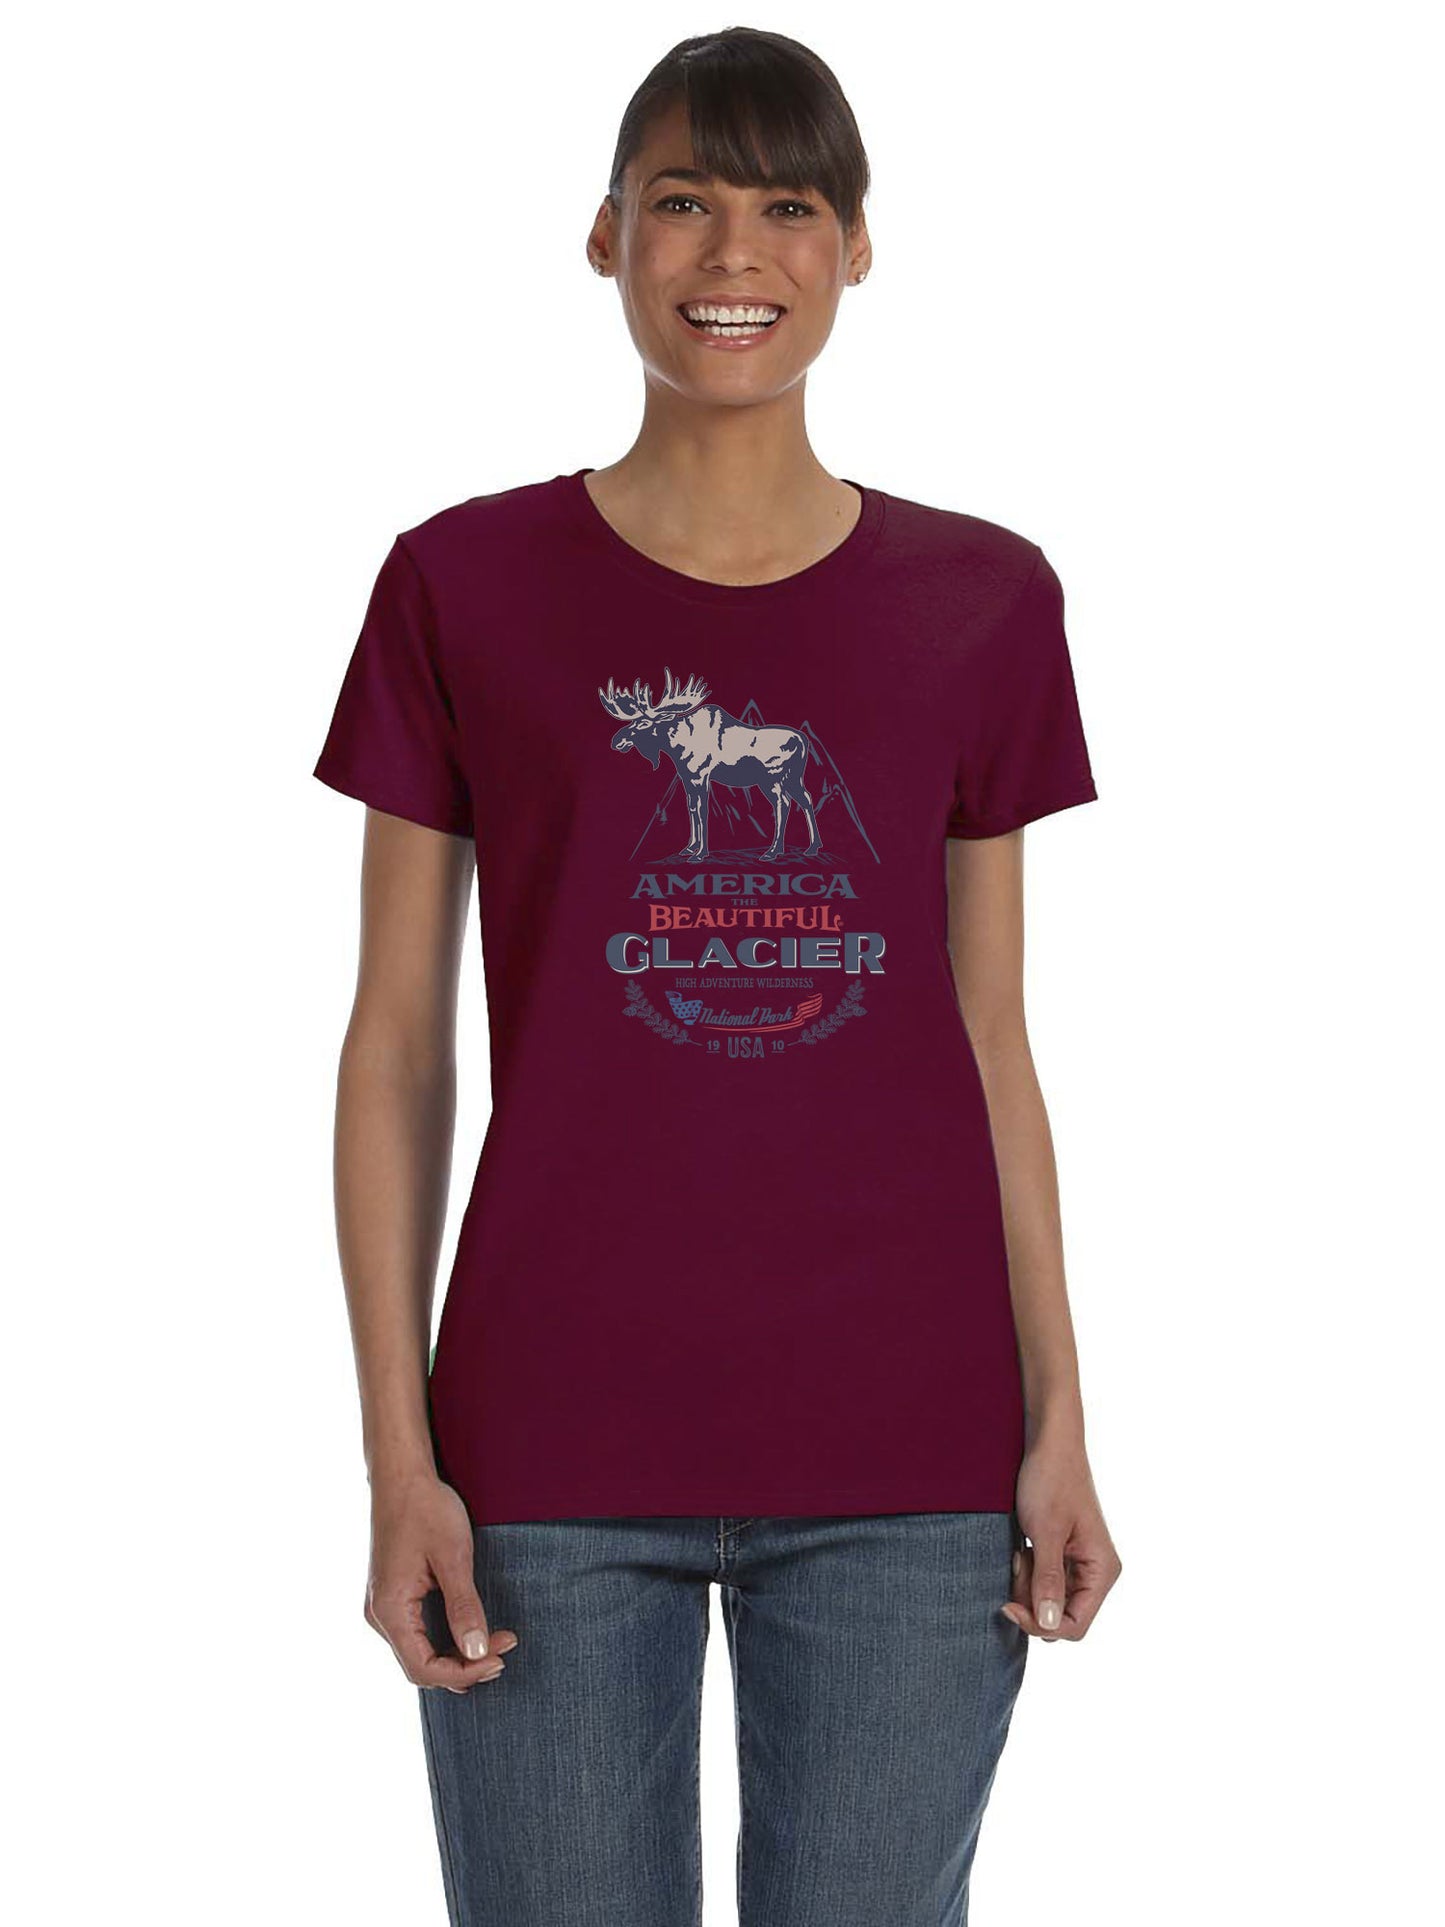 Glacier National Park Bull Moose Vintage Camp-style Graphic T-shirt